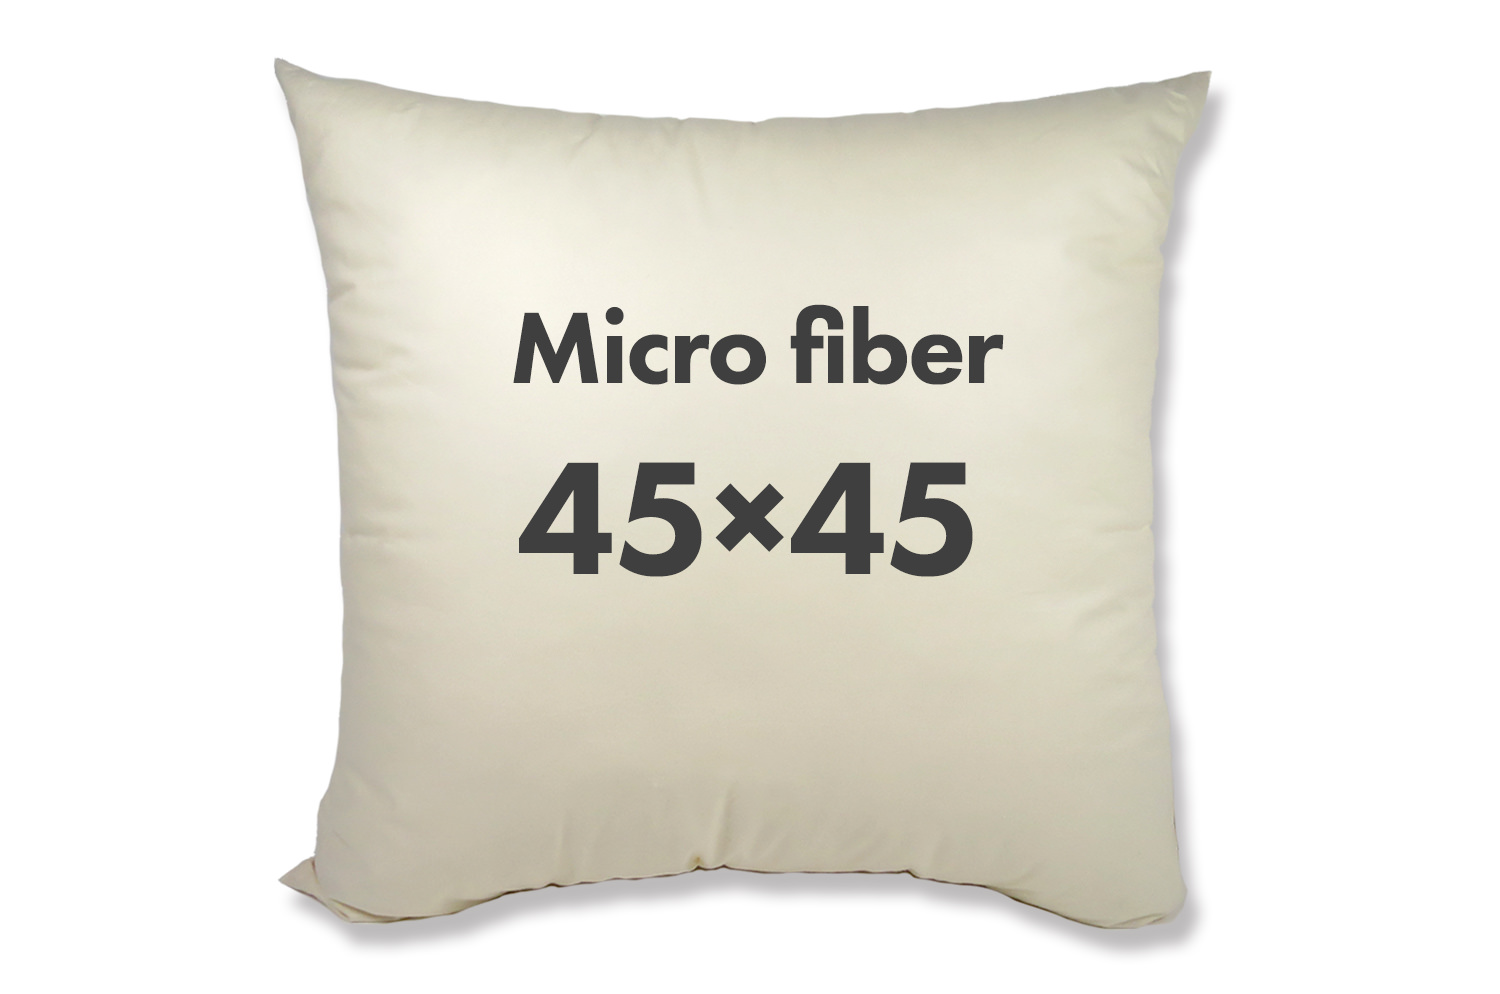 The Microfiber もちもち羽毛タッチ 日本製マイクロファイバーヌードクッション（クッション中身） 45×45cm用